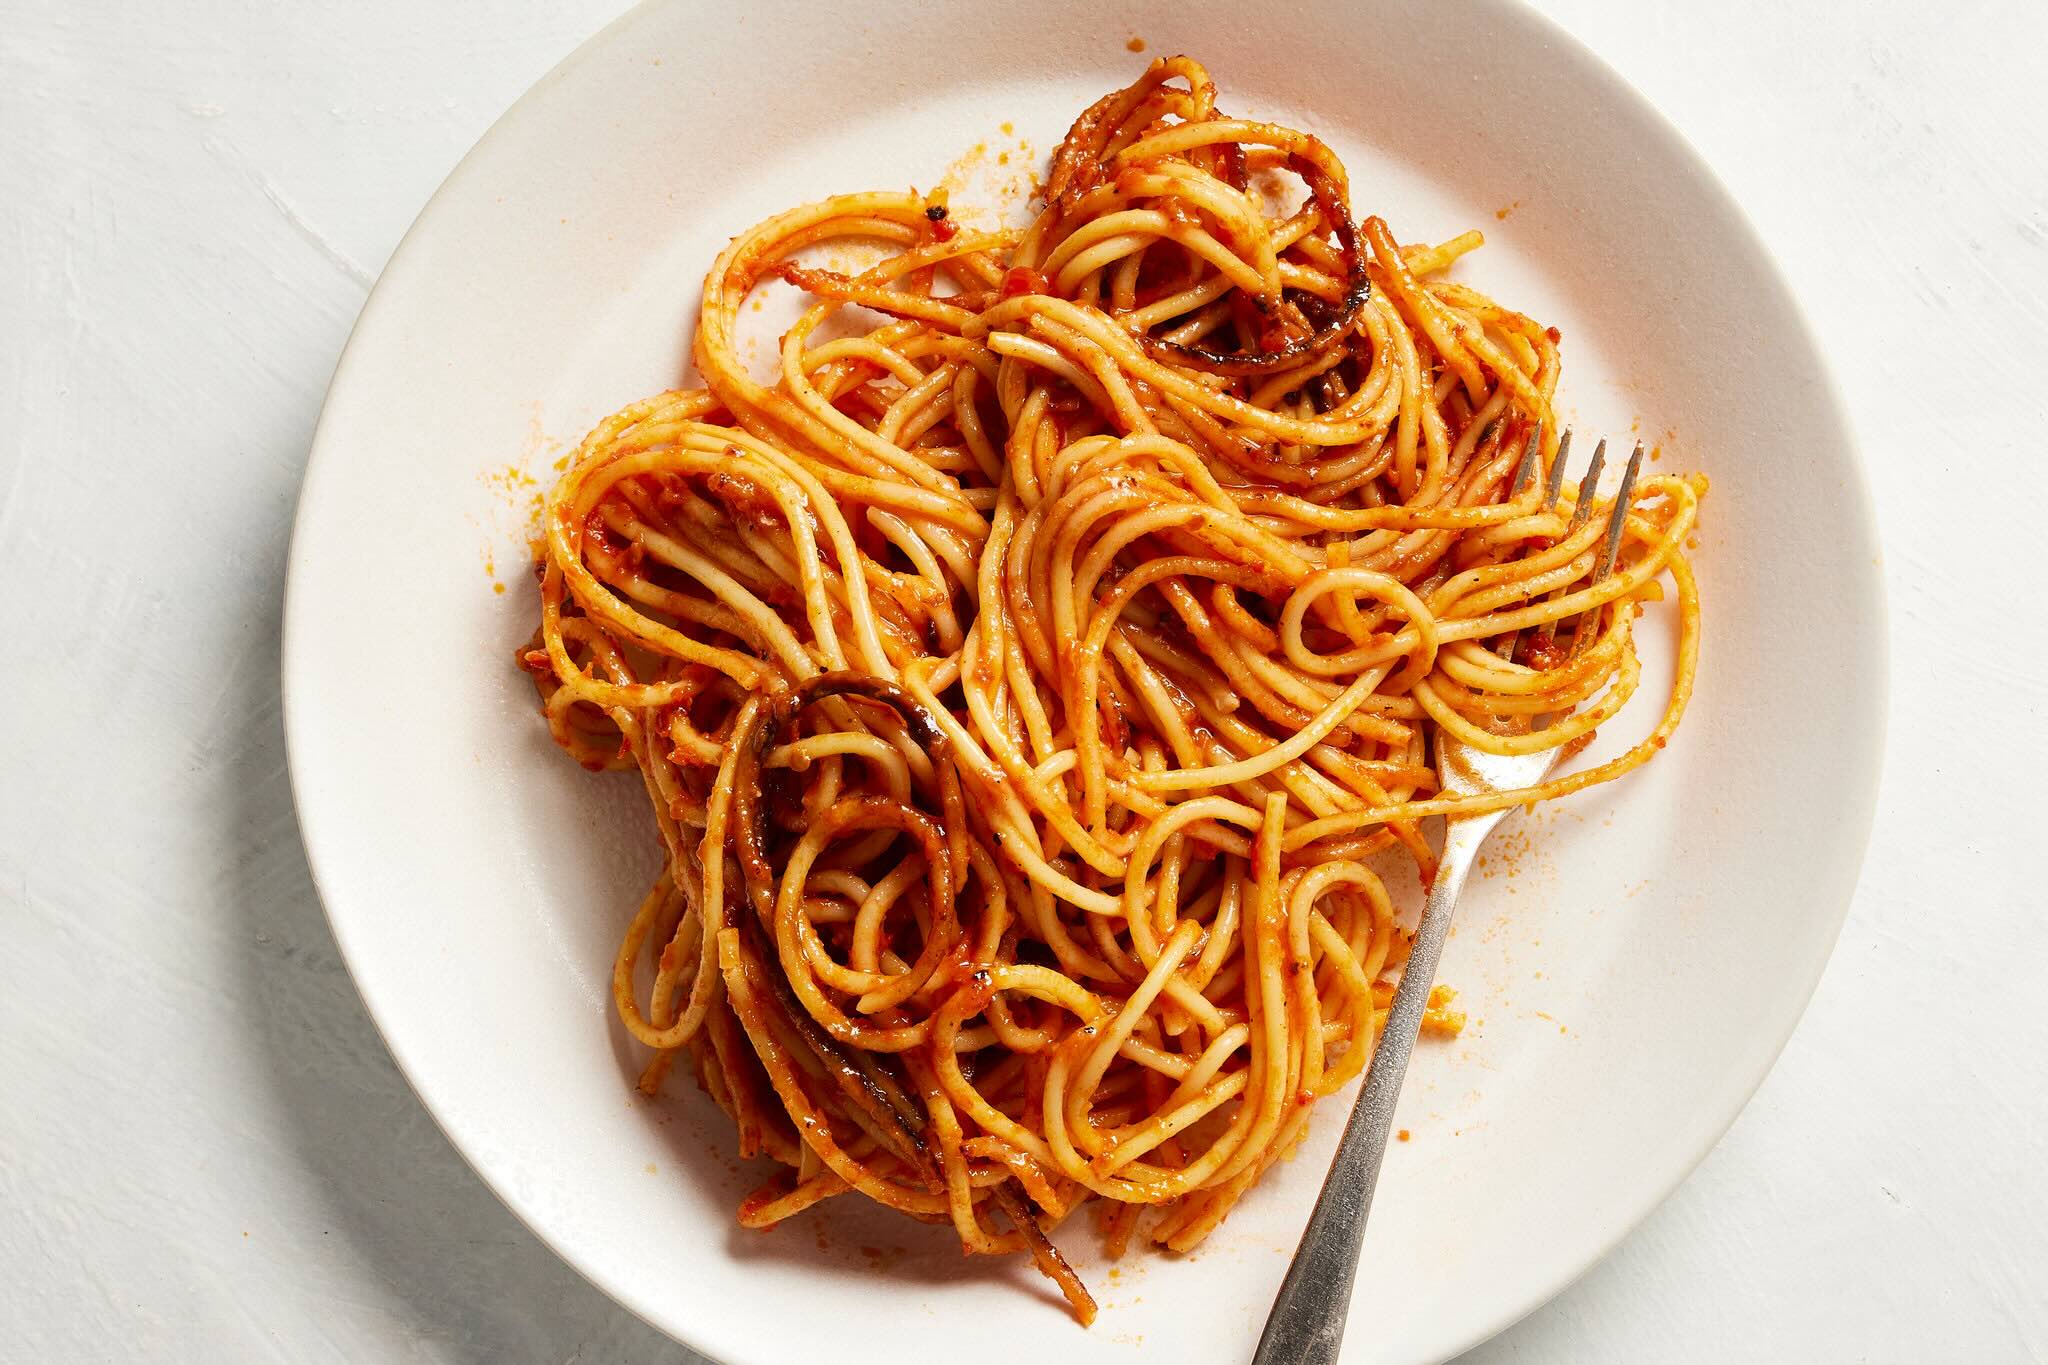 How To Store Spaghetti